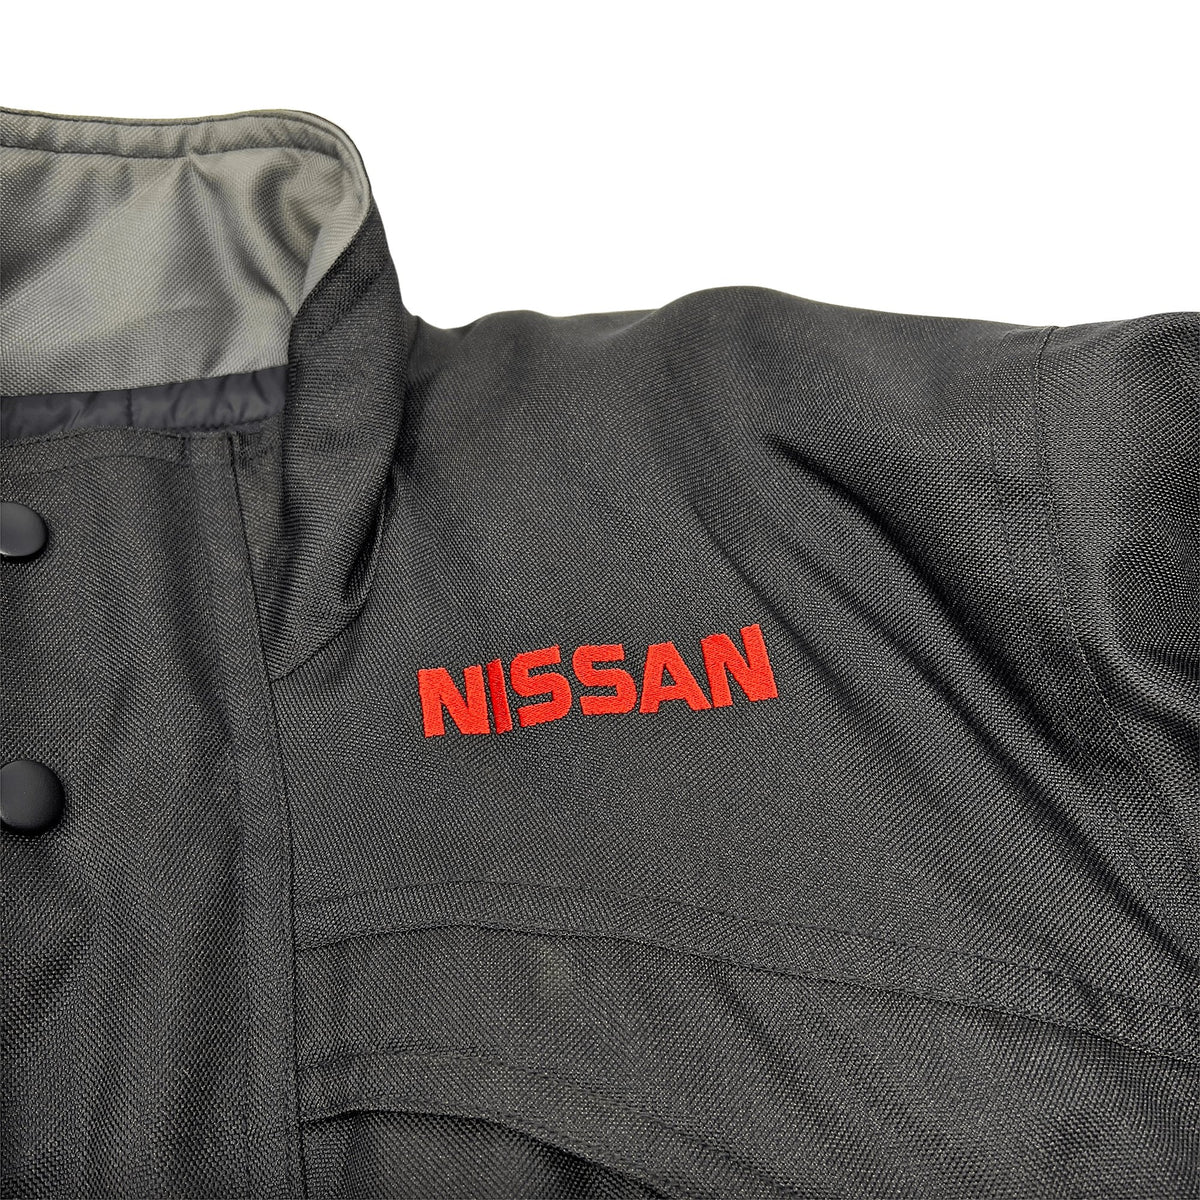 Retro JDM Nissan Nismo Japan Heavy Duty Mechanic Jumper Jacket M - Sugoi JDM